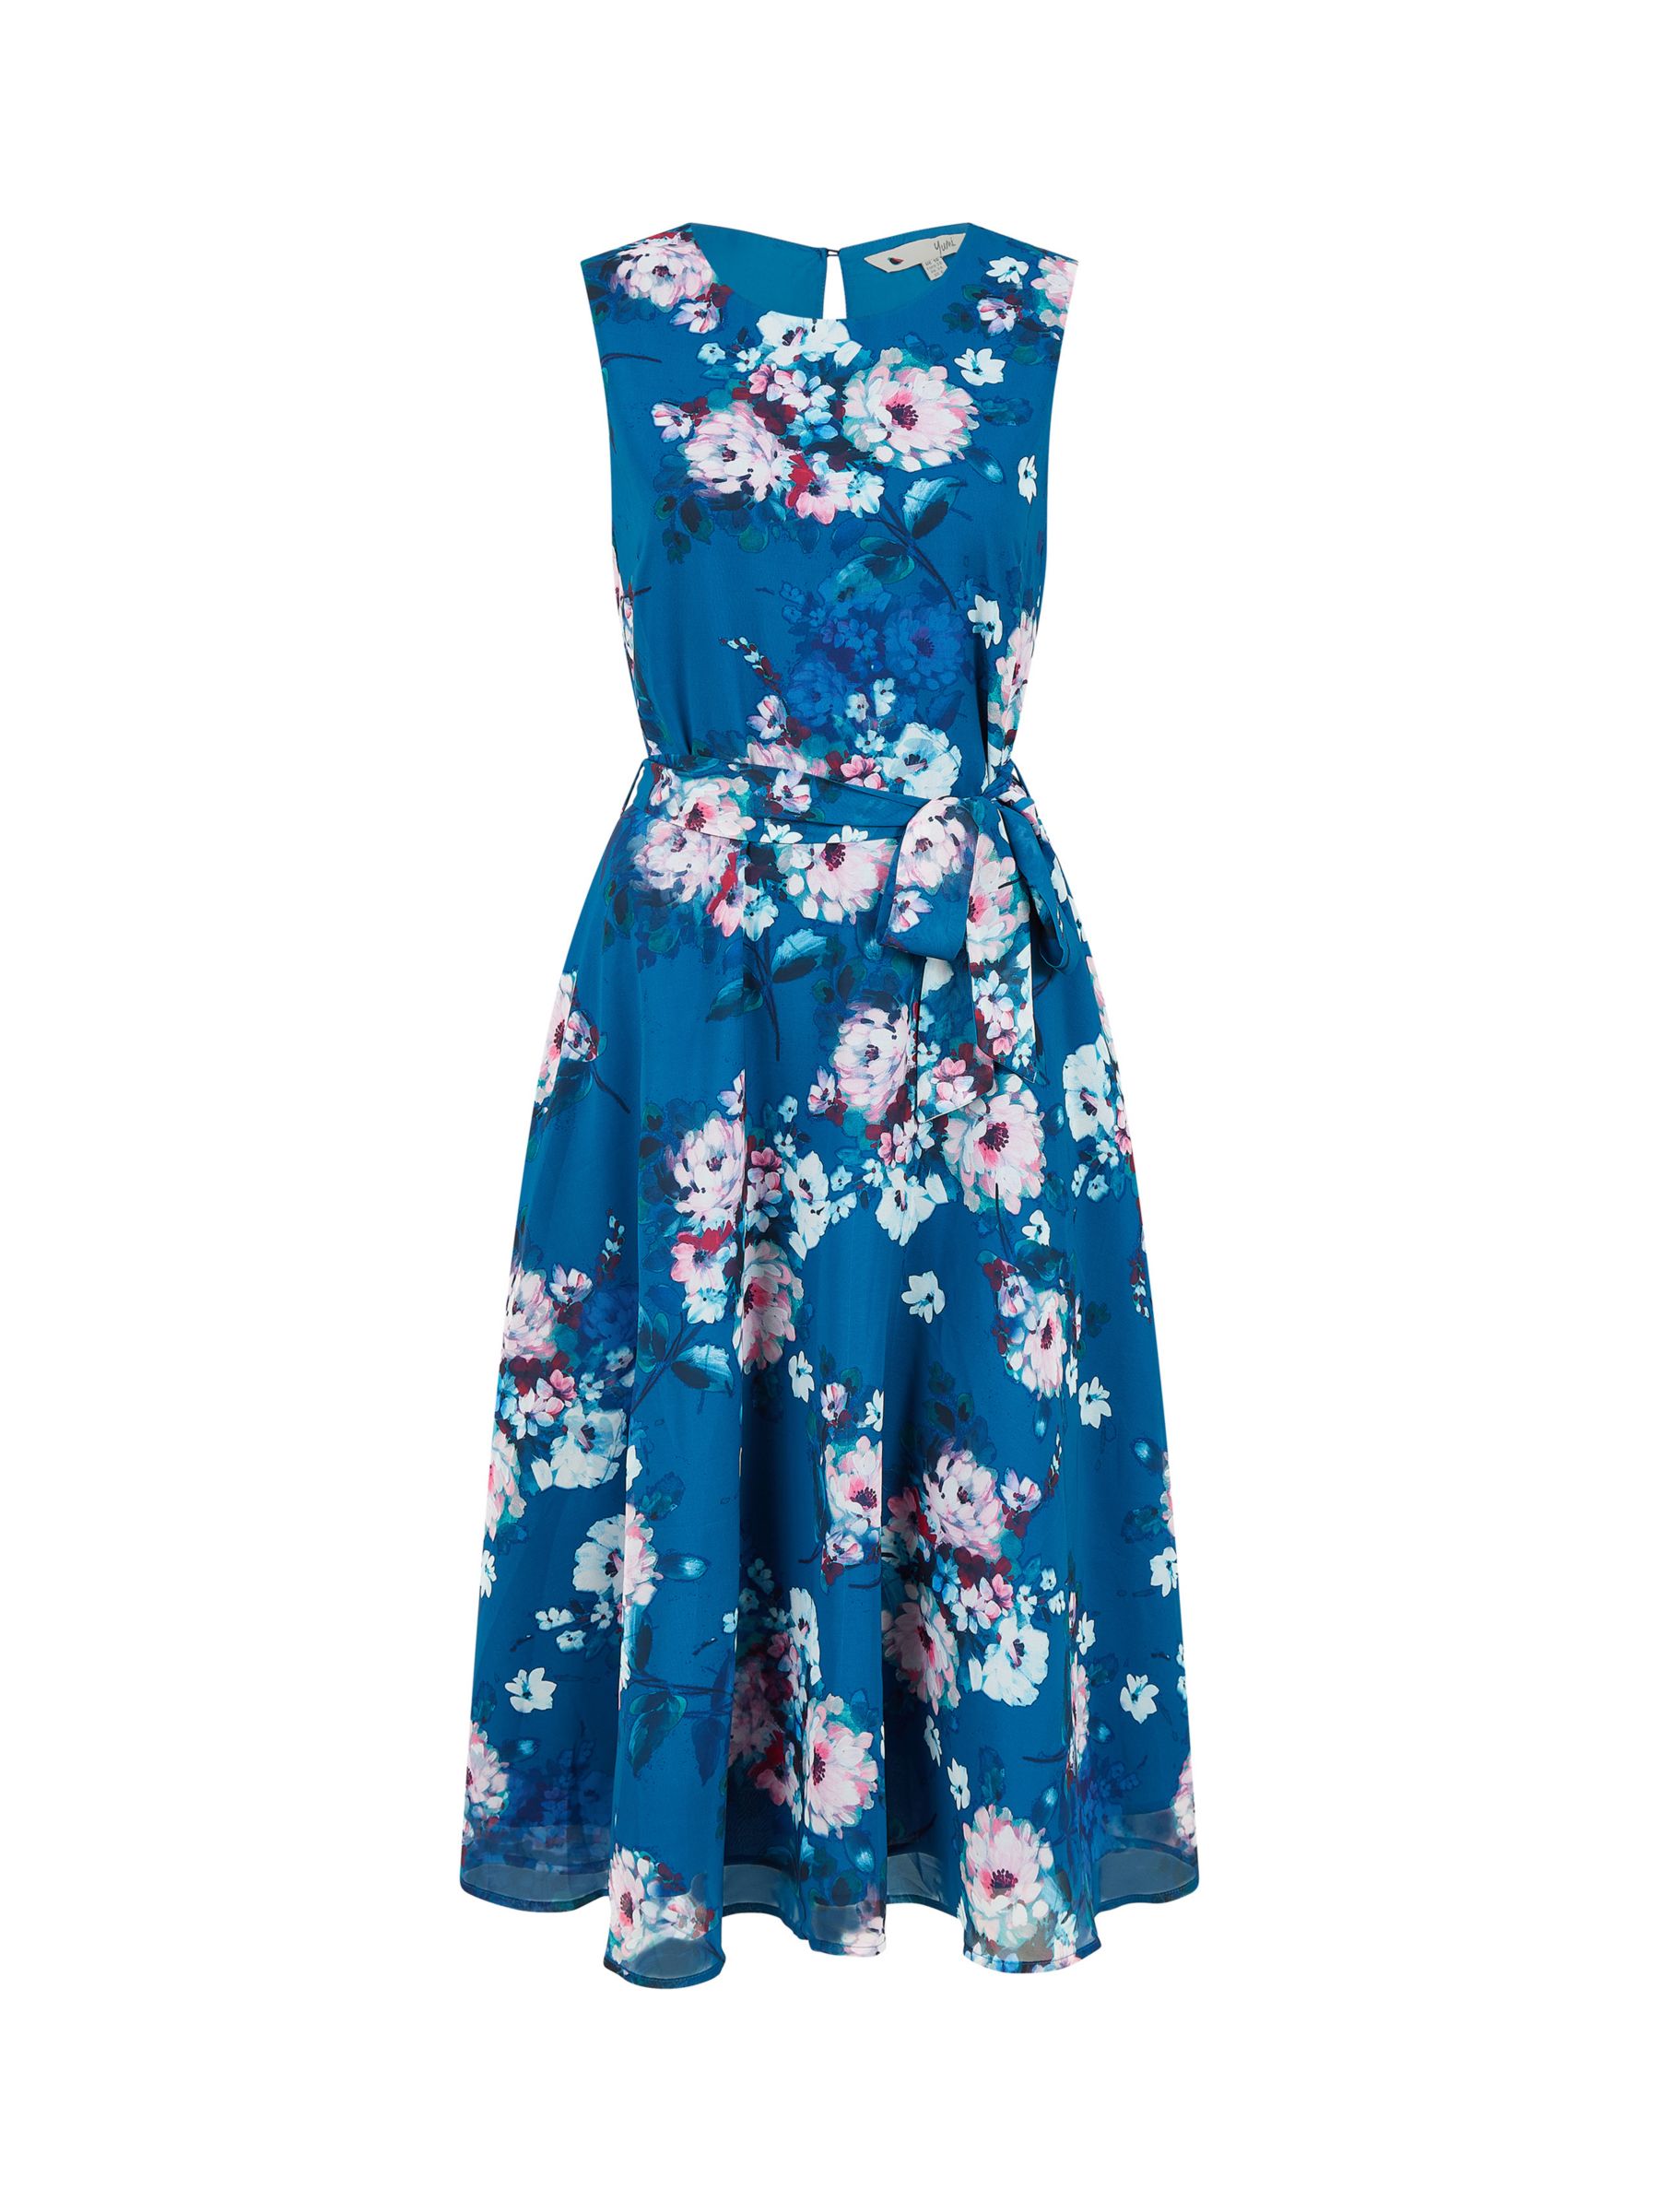 Buy Yumi Floral Skater Dress, Teal/Multi Online at johnlewis.com